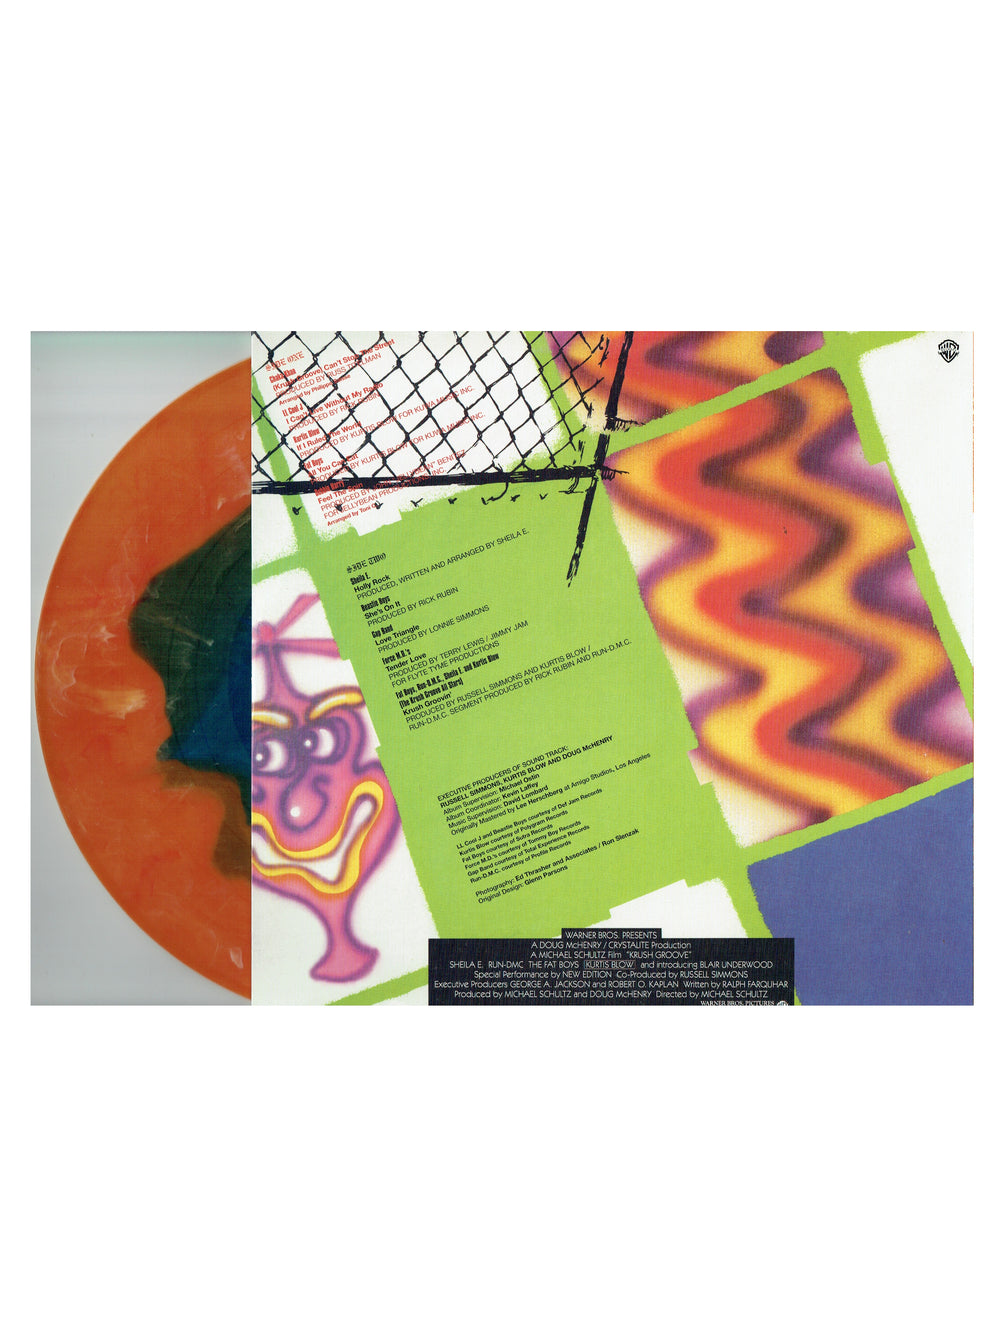 Prince – Krush Groove OST Sheila E Orange Vinyl 12 Inch Album Re Press Prince